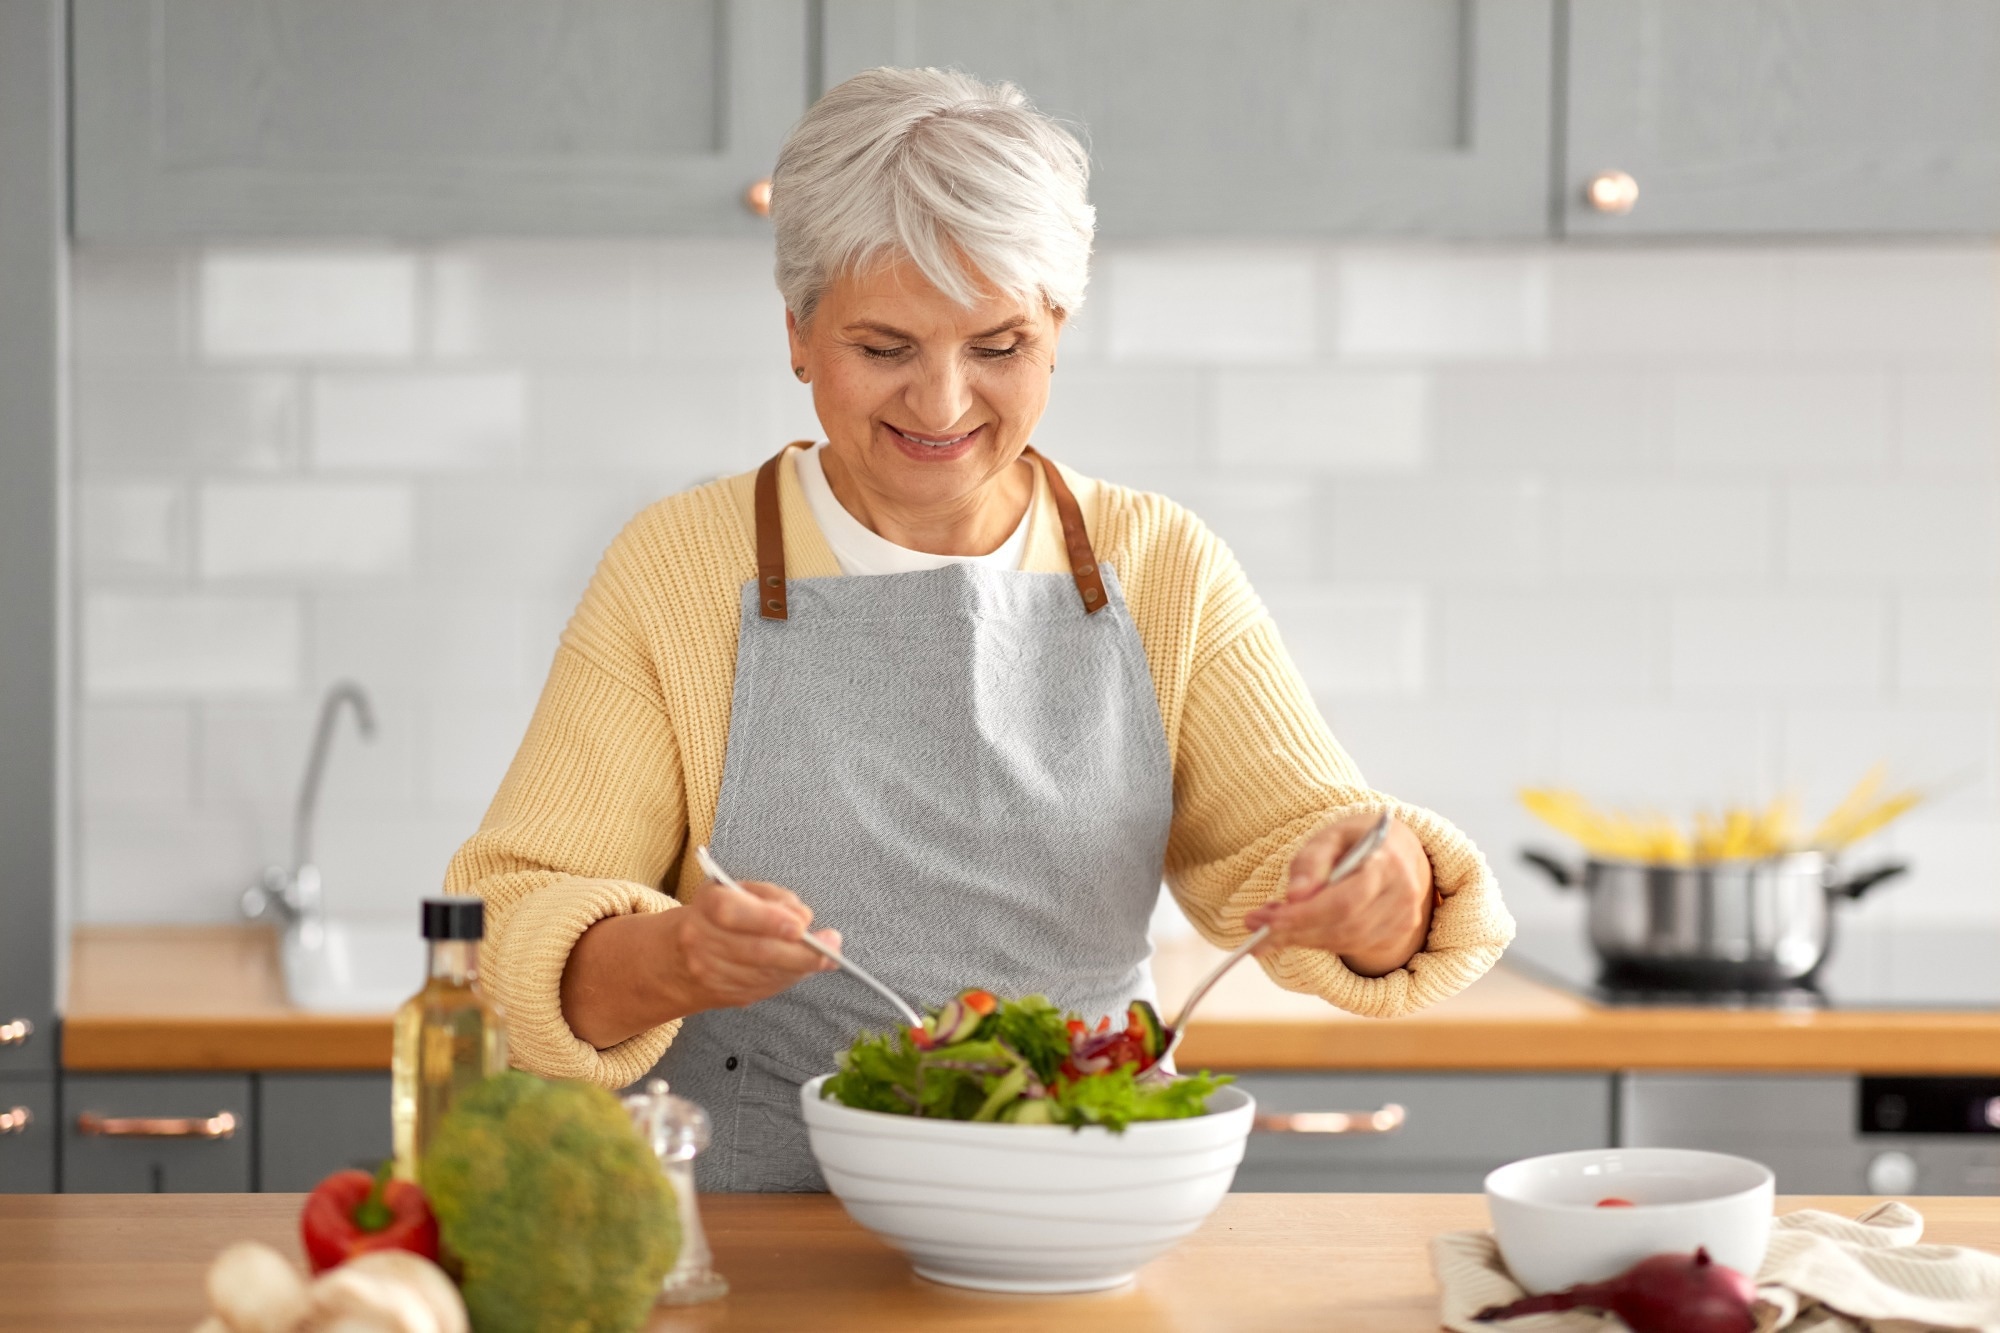 The menopausal symptoms and food consumption in post-menopausal women ...